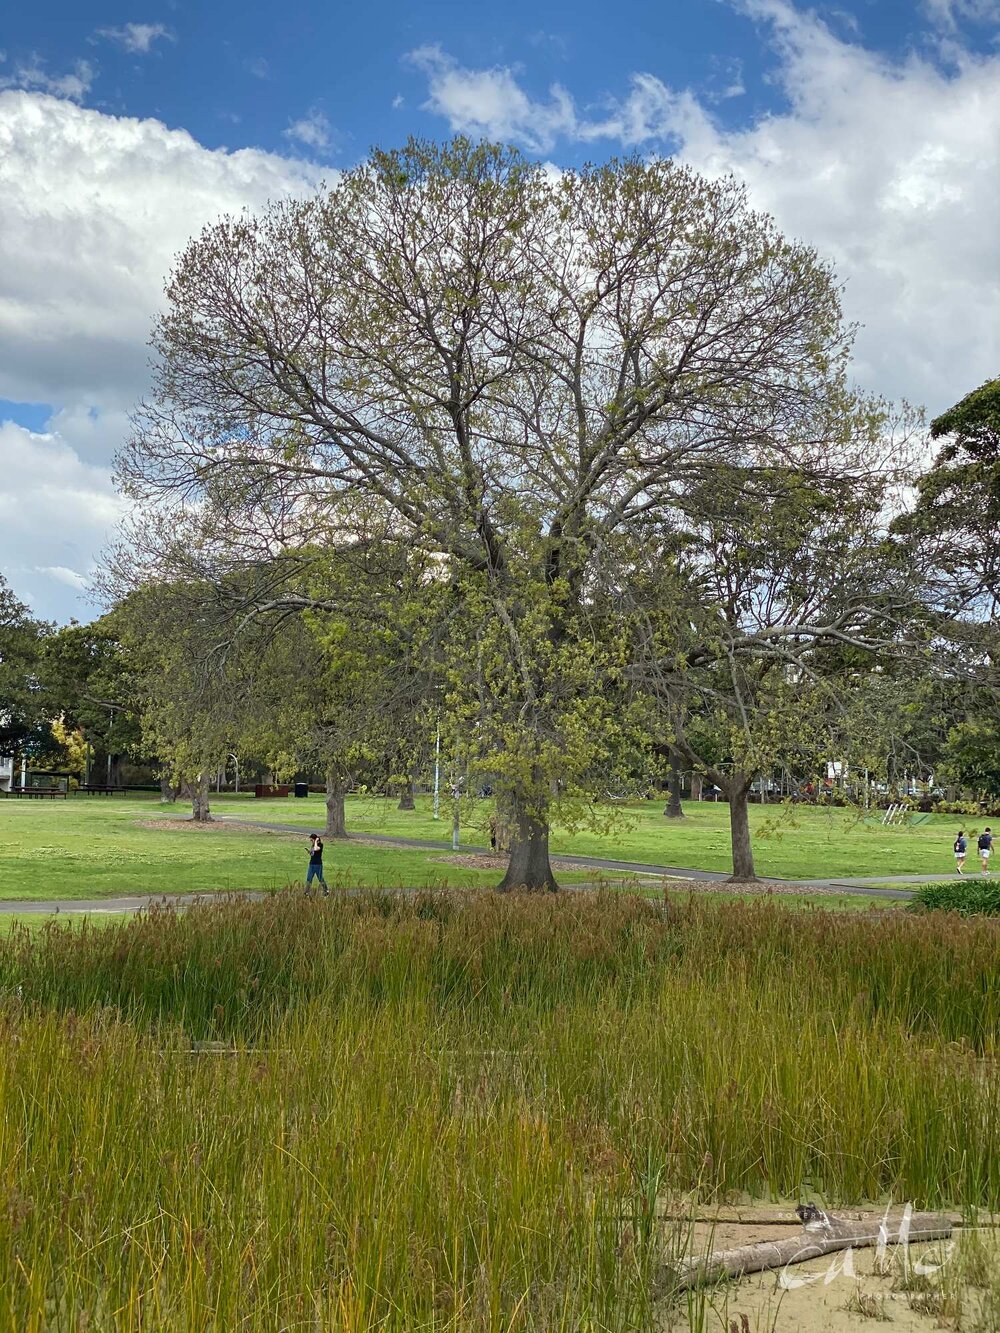 Victoria Park, Sydney (Iphone 11 Pro - 2x zoom lens)